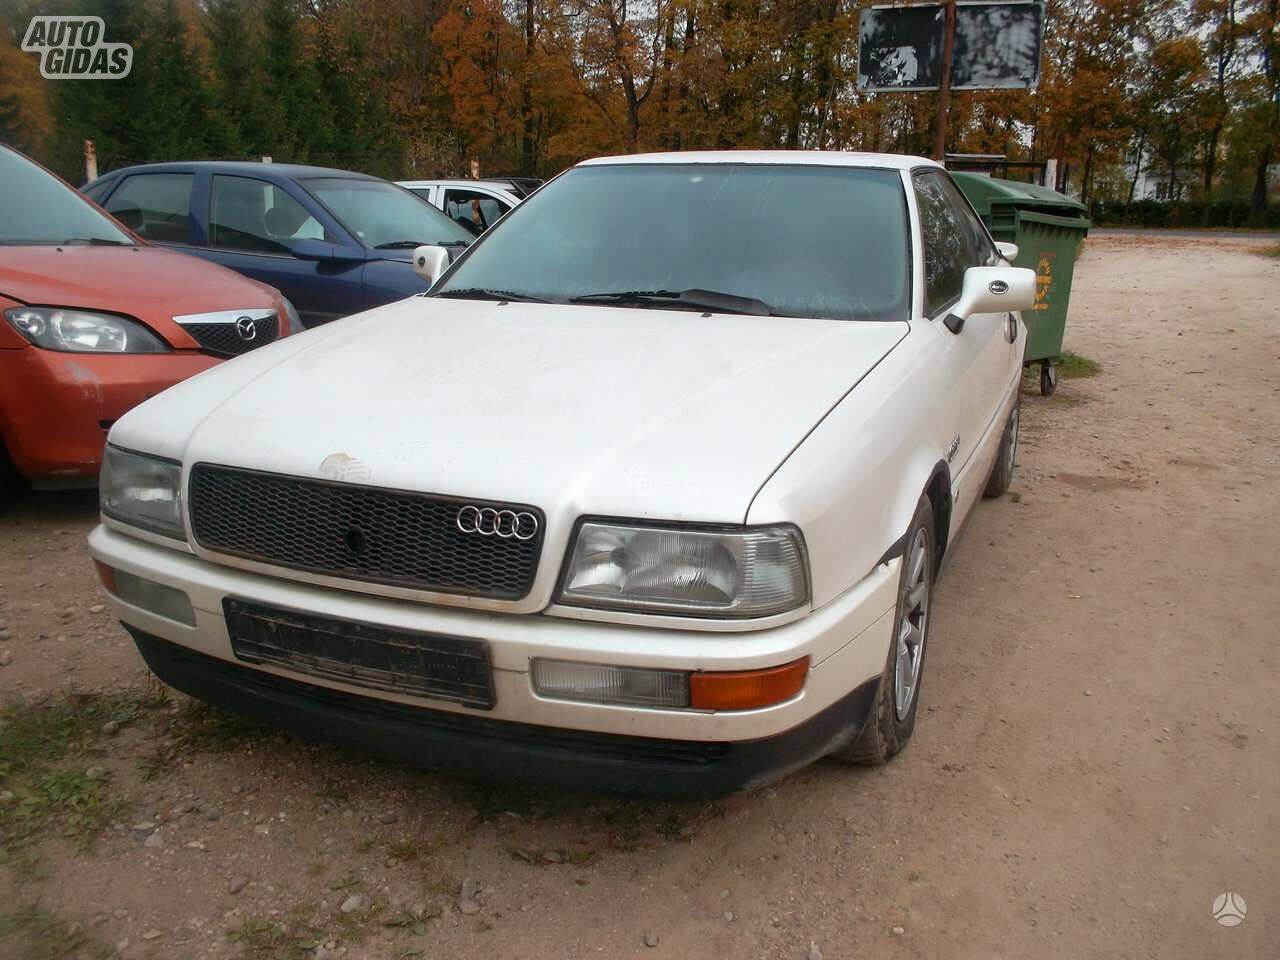 Audi Coupe 1993 m dalys